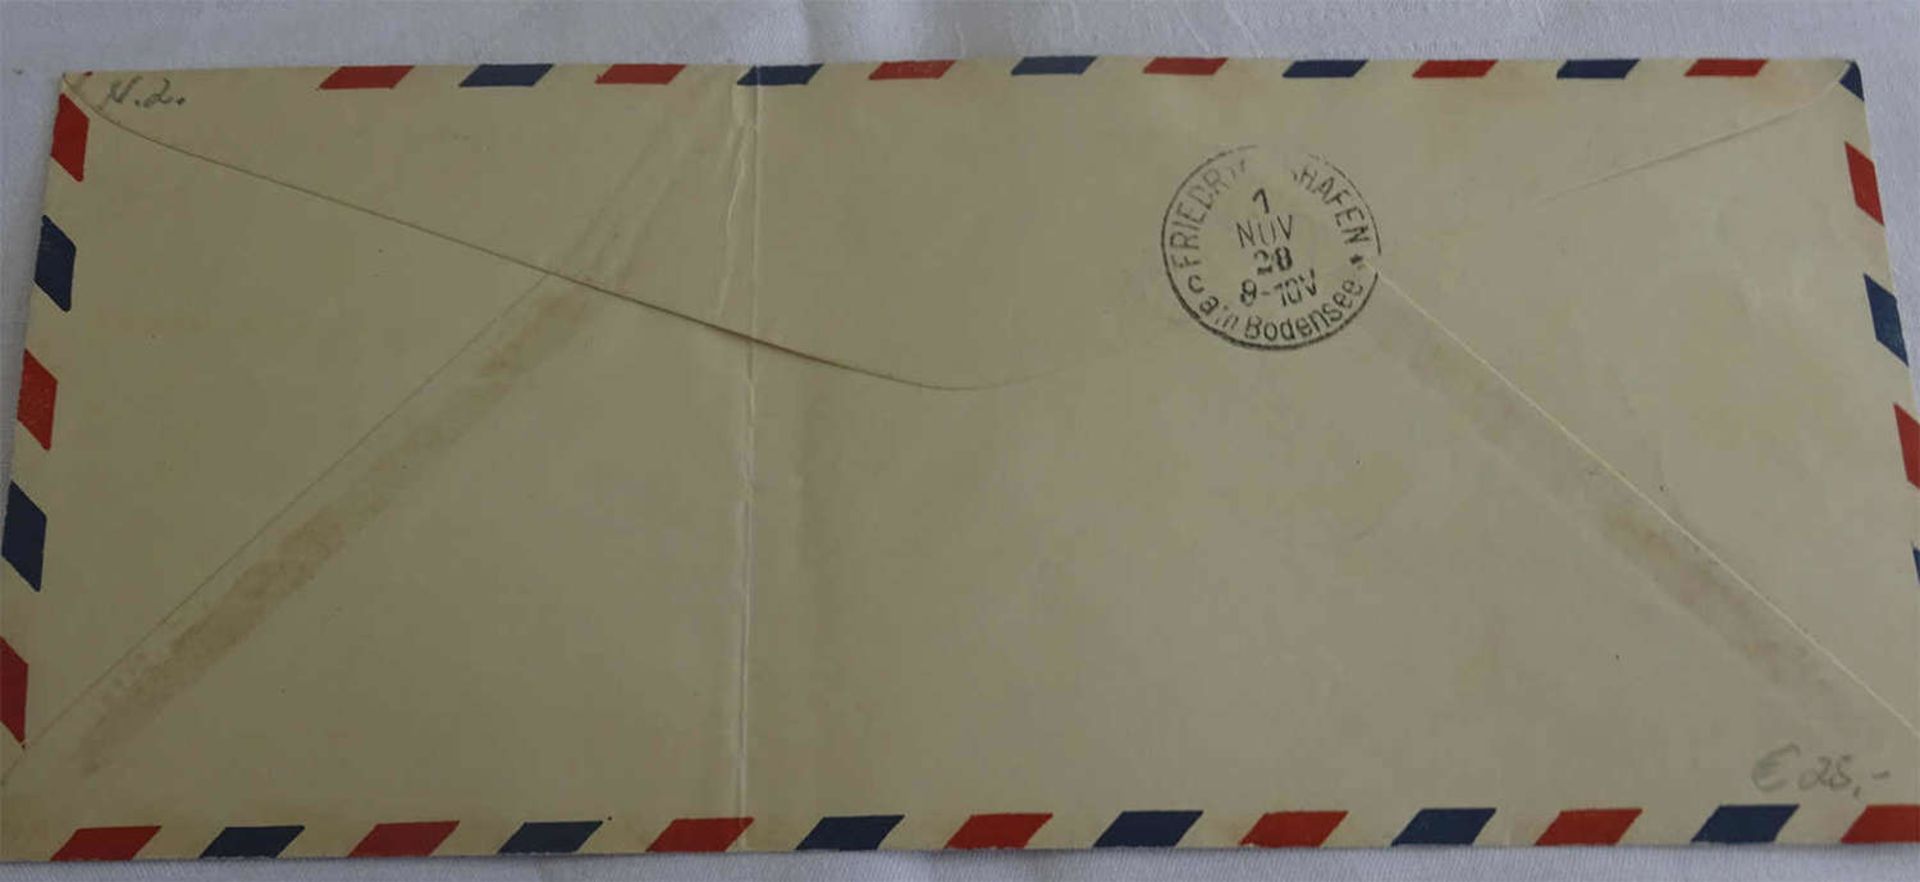 Zeppelinbrief Amerikafahrt 1928 (Rückfahrt) mit guter Frankatur, 50 Cent. u.a. Sieger 22BZeppelin - Image 2 of 2